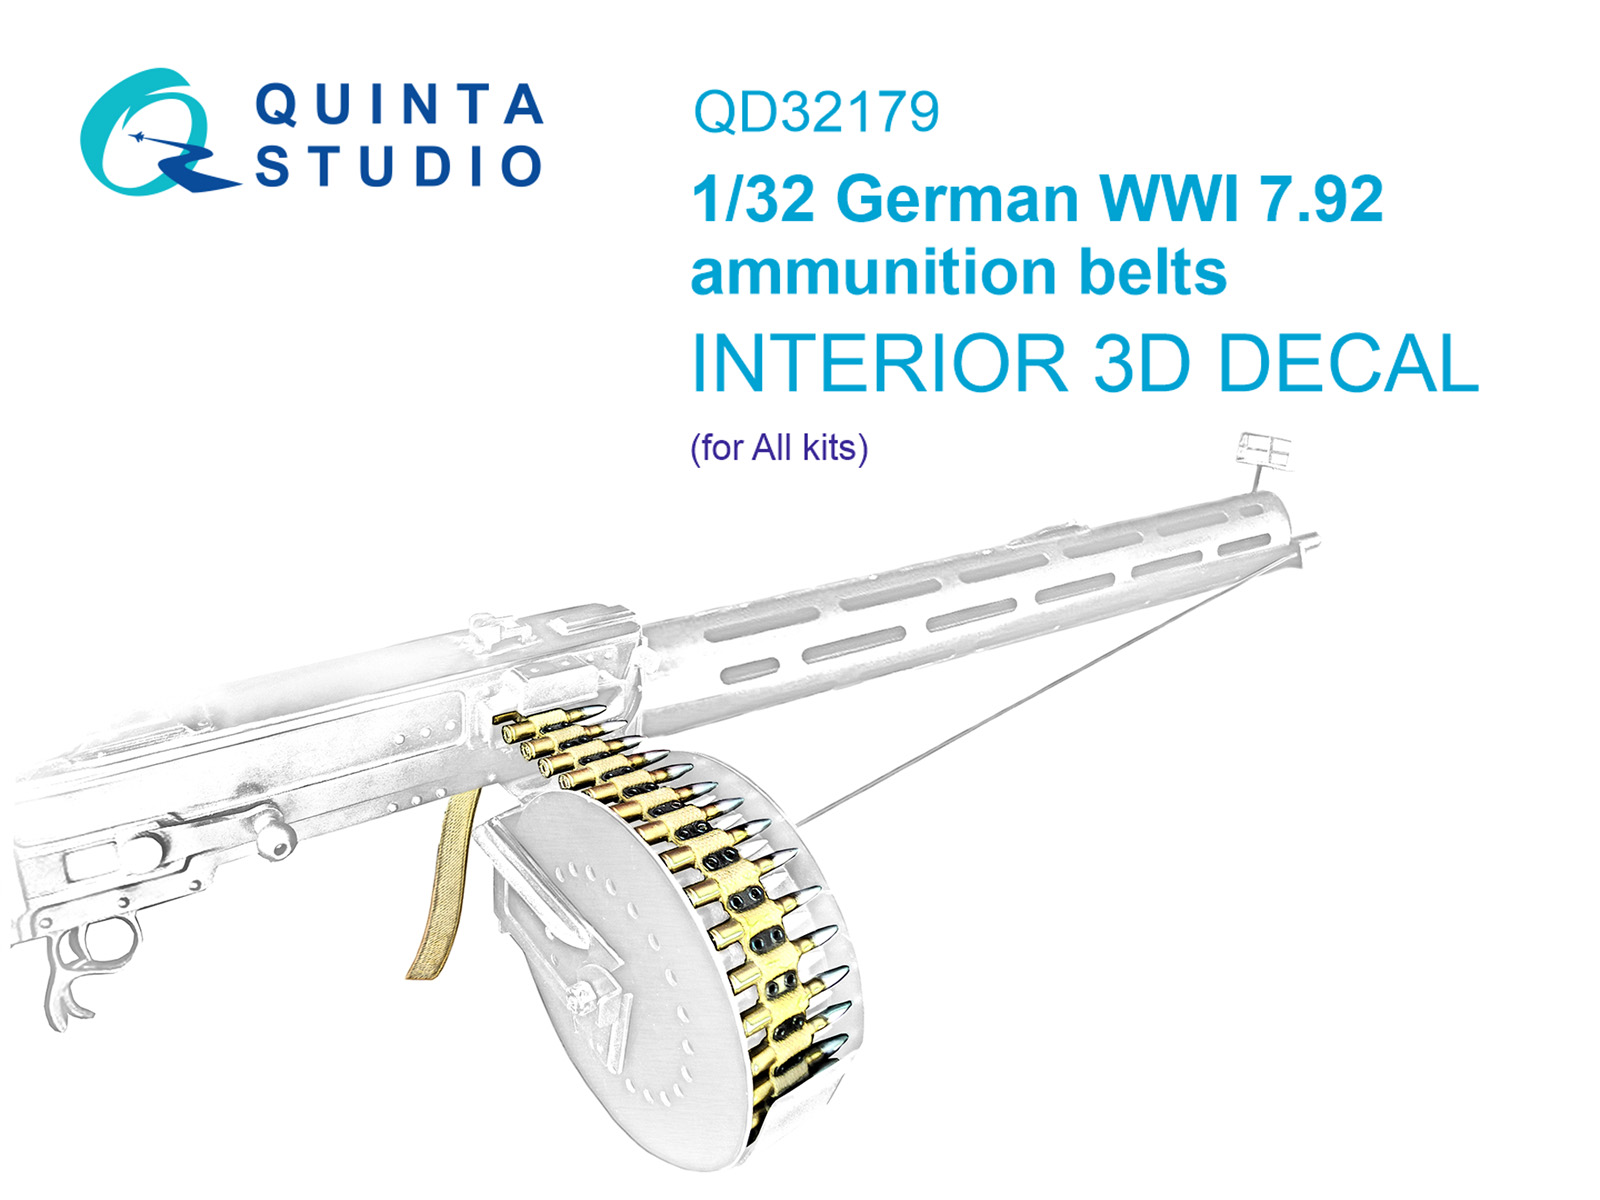 German WWI 7.92 ammunition belts (All kits)